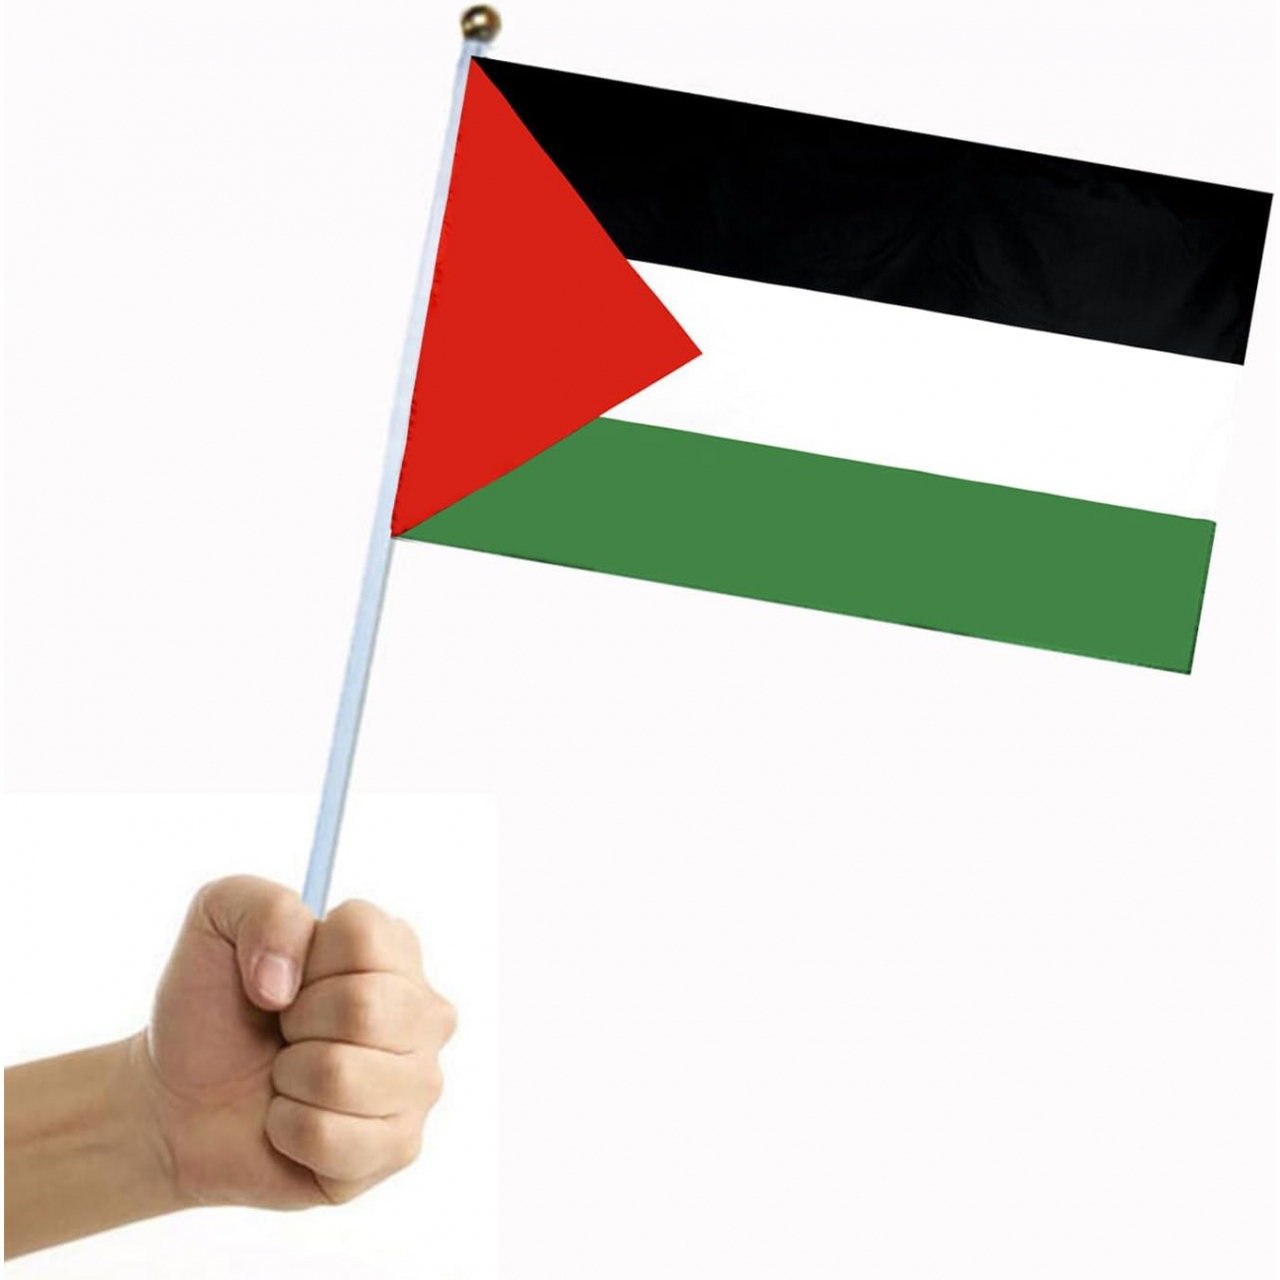 Praporek na tyčce vlajka Palestina 14 x 21 - barevný